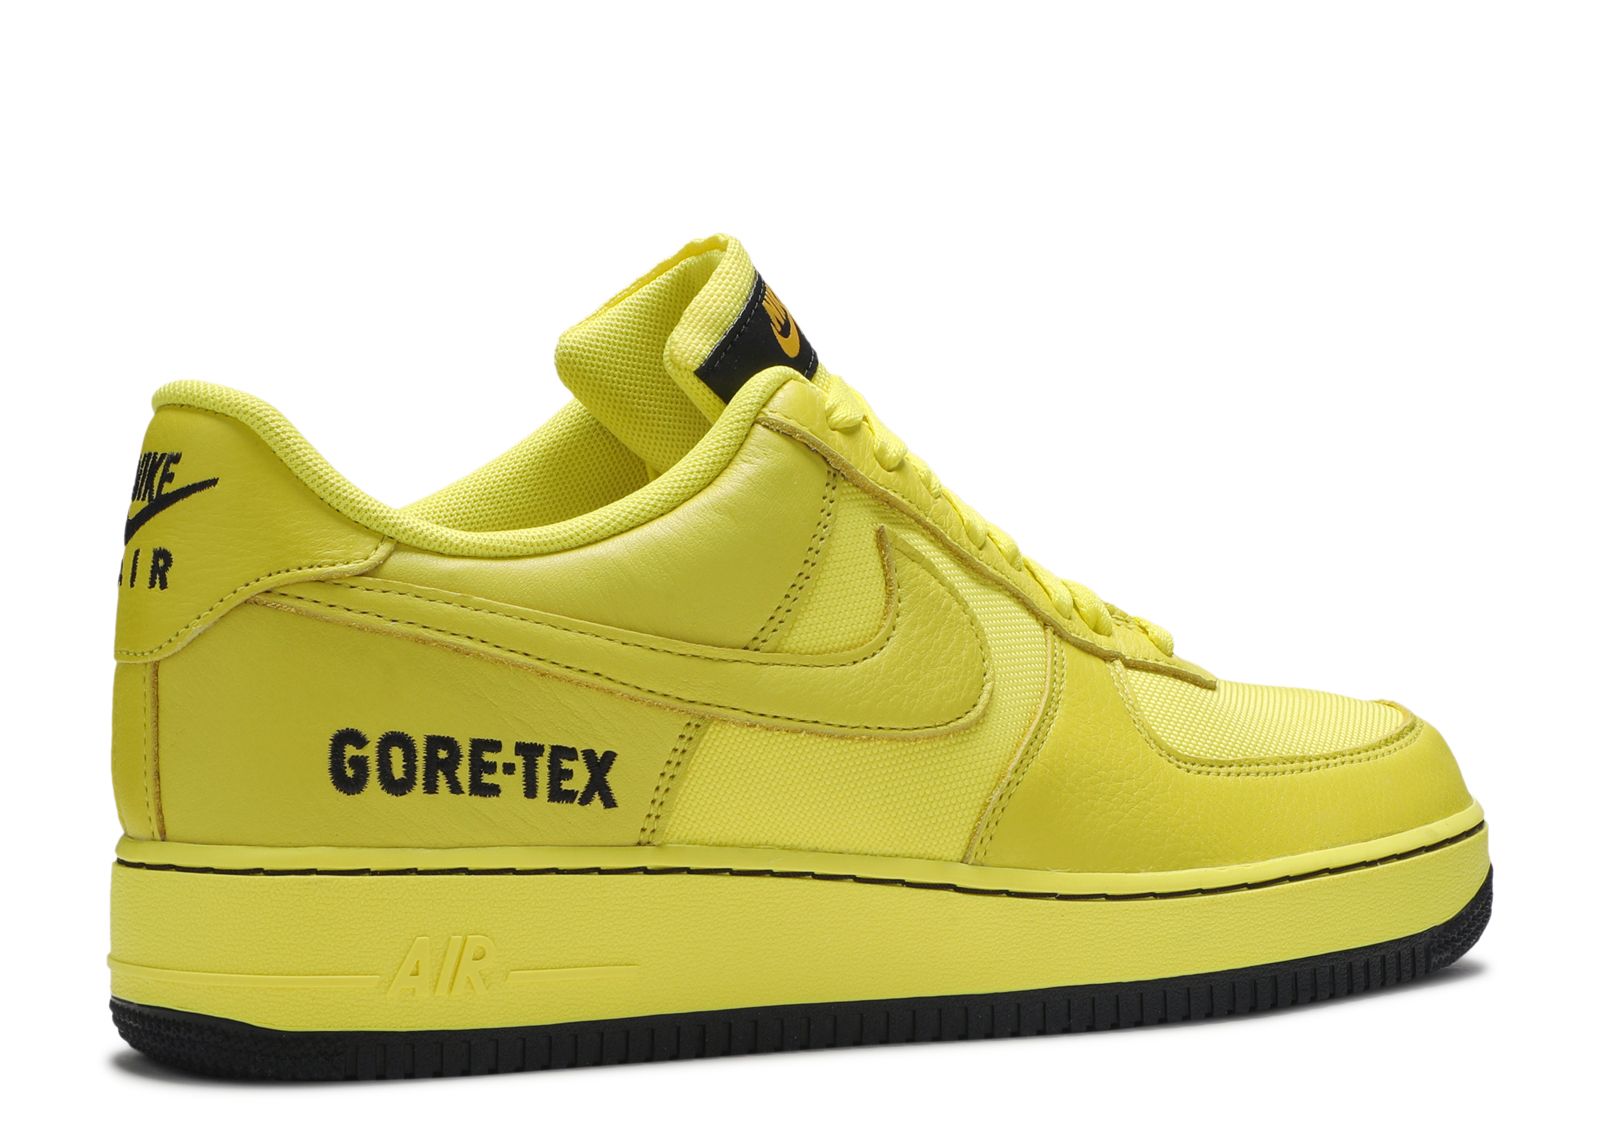 Gore Tex X Air Force 1 Low 'Dynamic Yellow' - Nike - CK2630 701 ... برادة يوجين